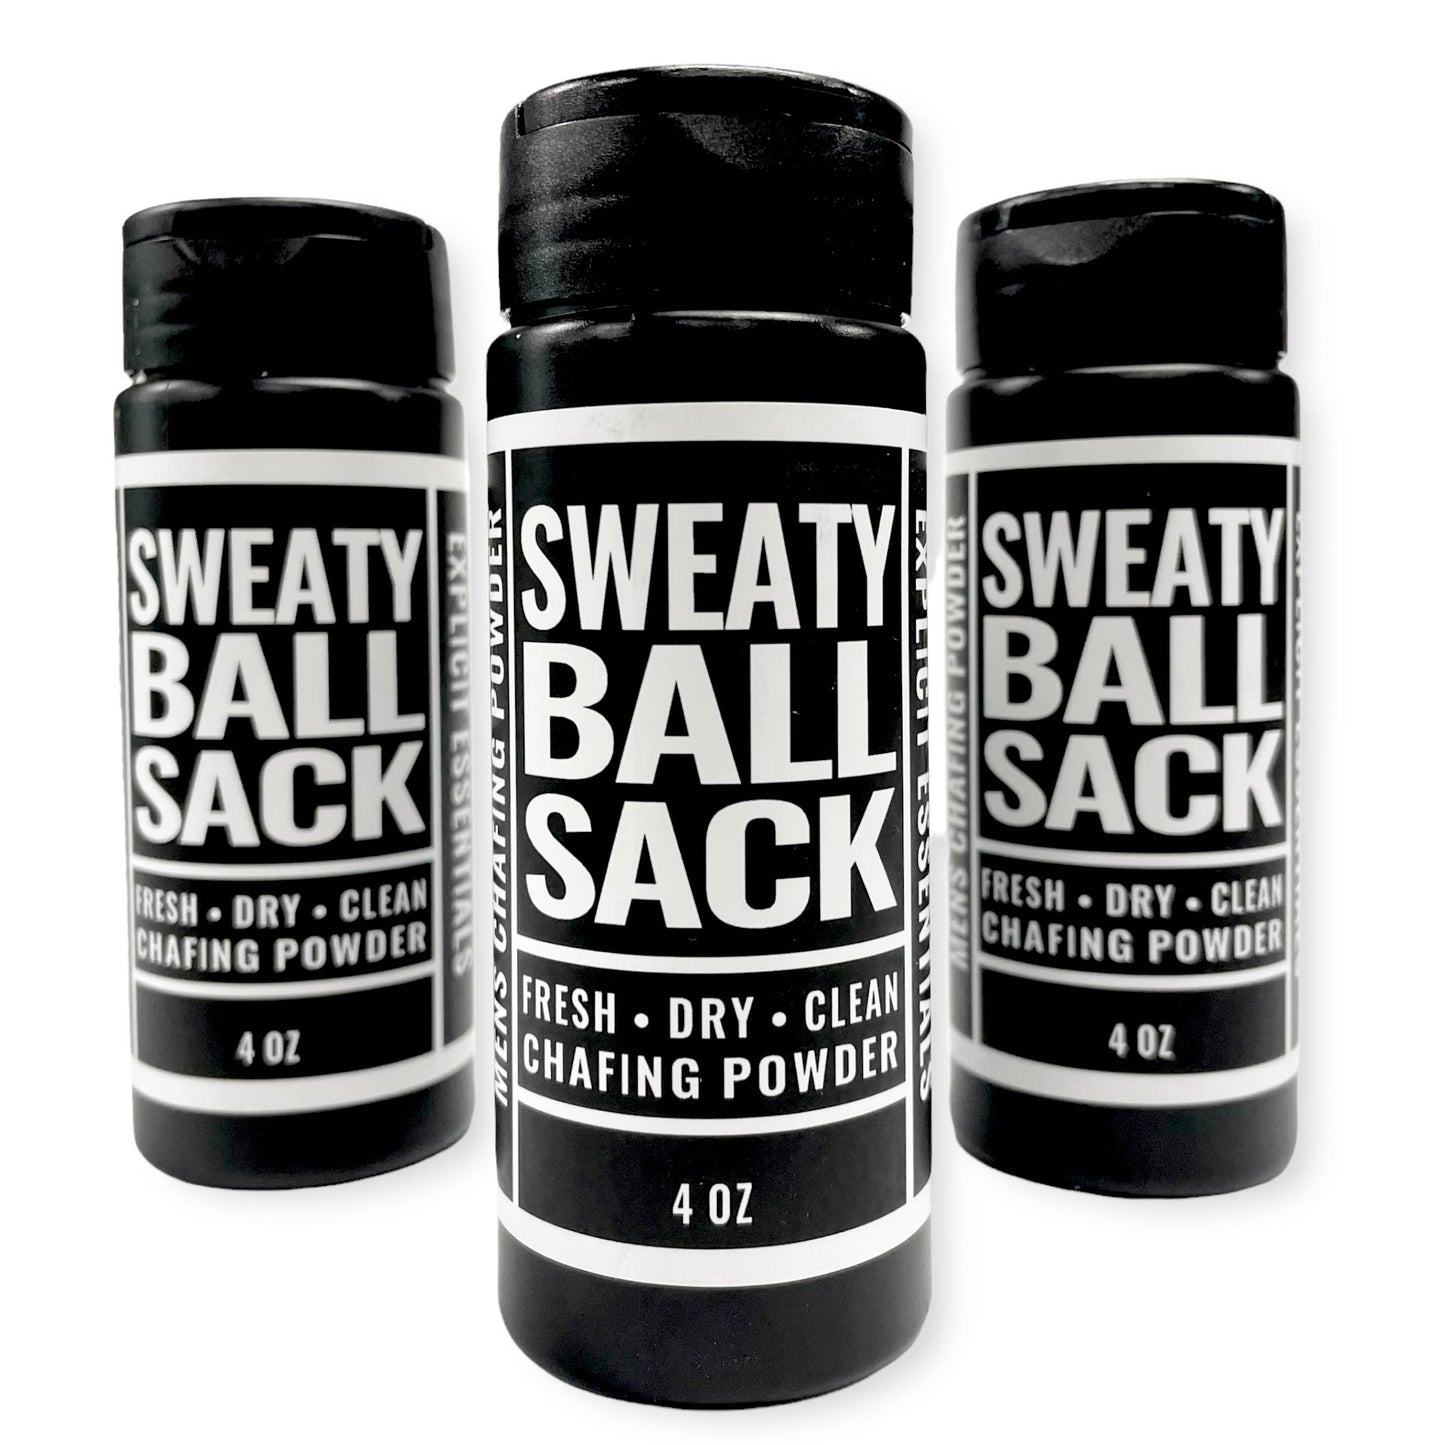 Sweaty Ball Sack Chafing Powder